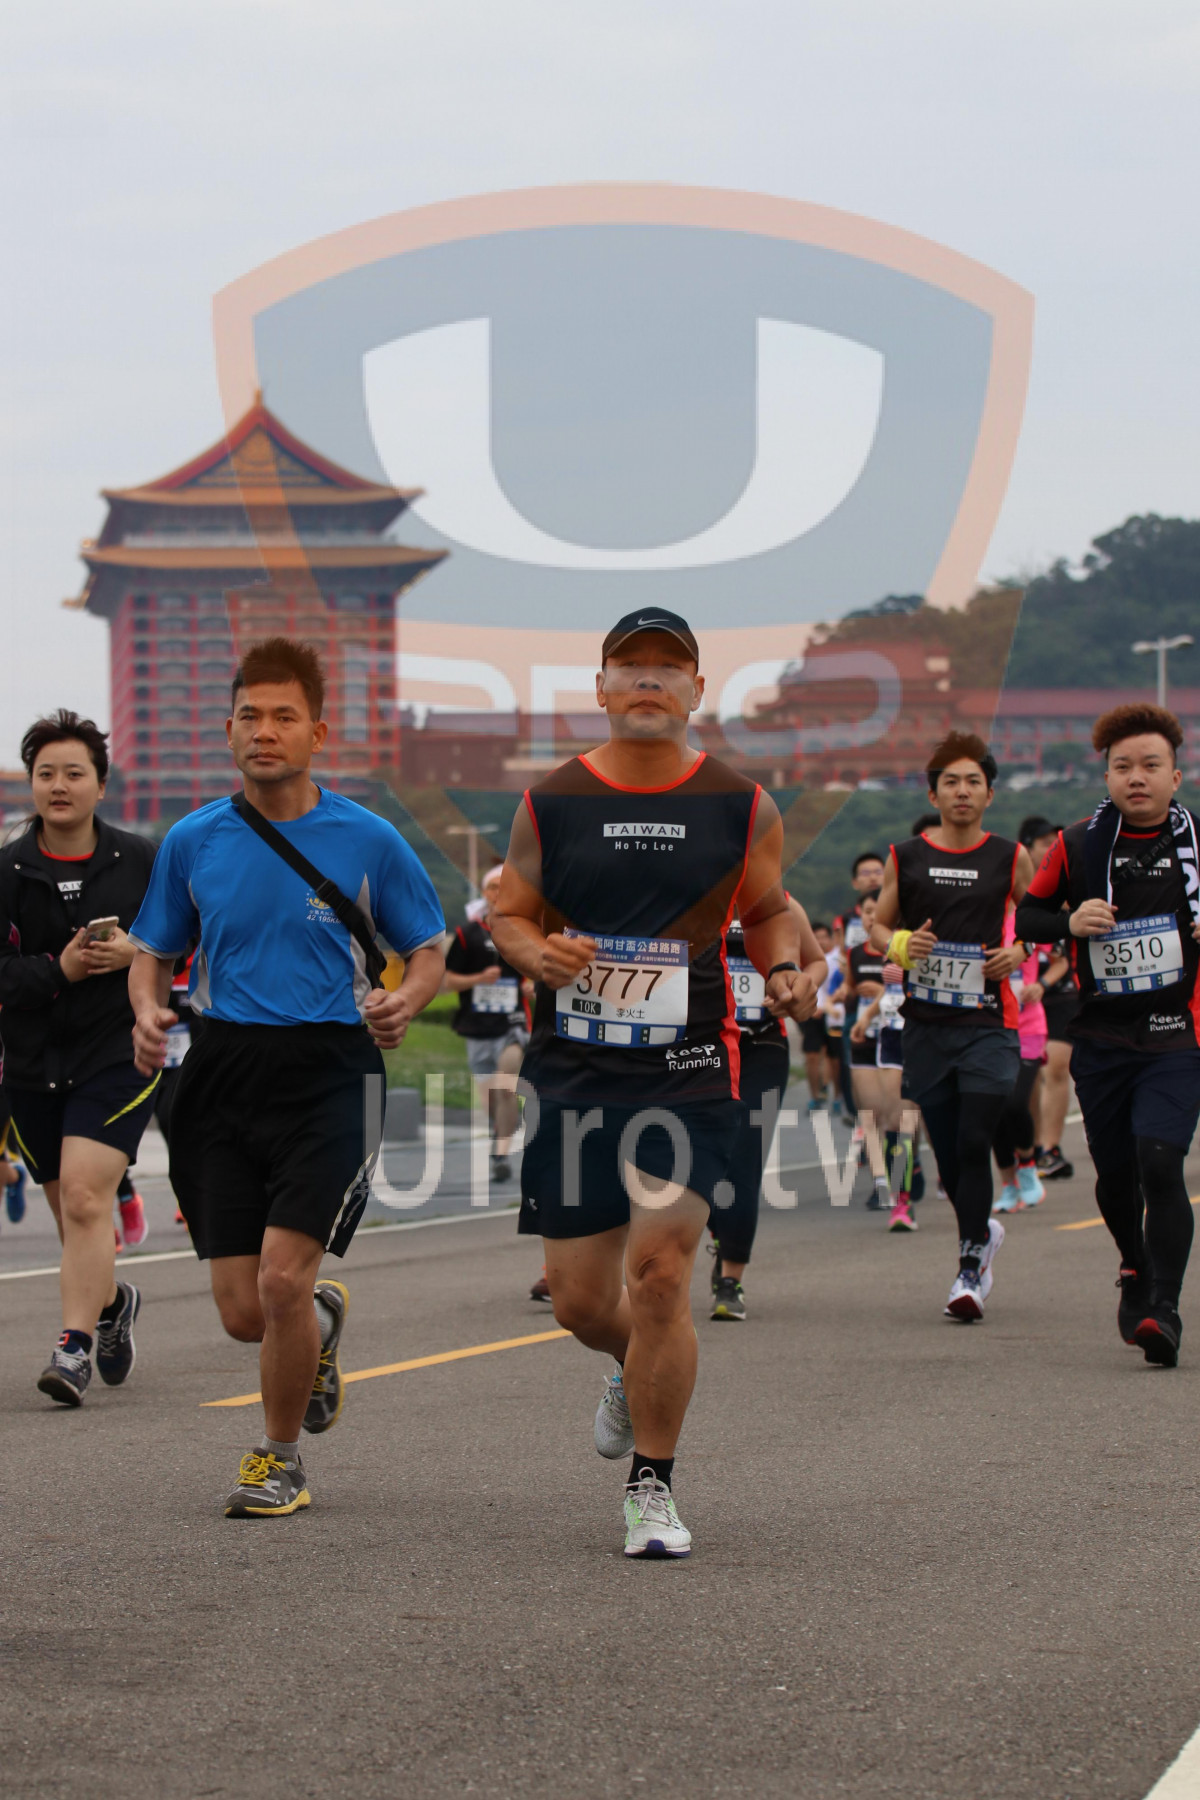 AIWAN,Ho To Lee,,3510,3777,CEL,Running|2018 第九屆阿甘盃公益路跑|Soryu Asuka Langley